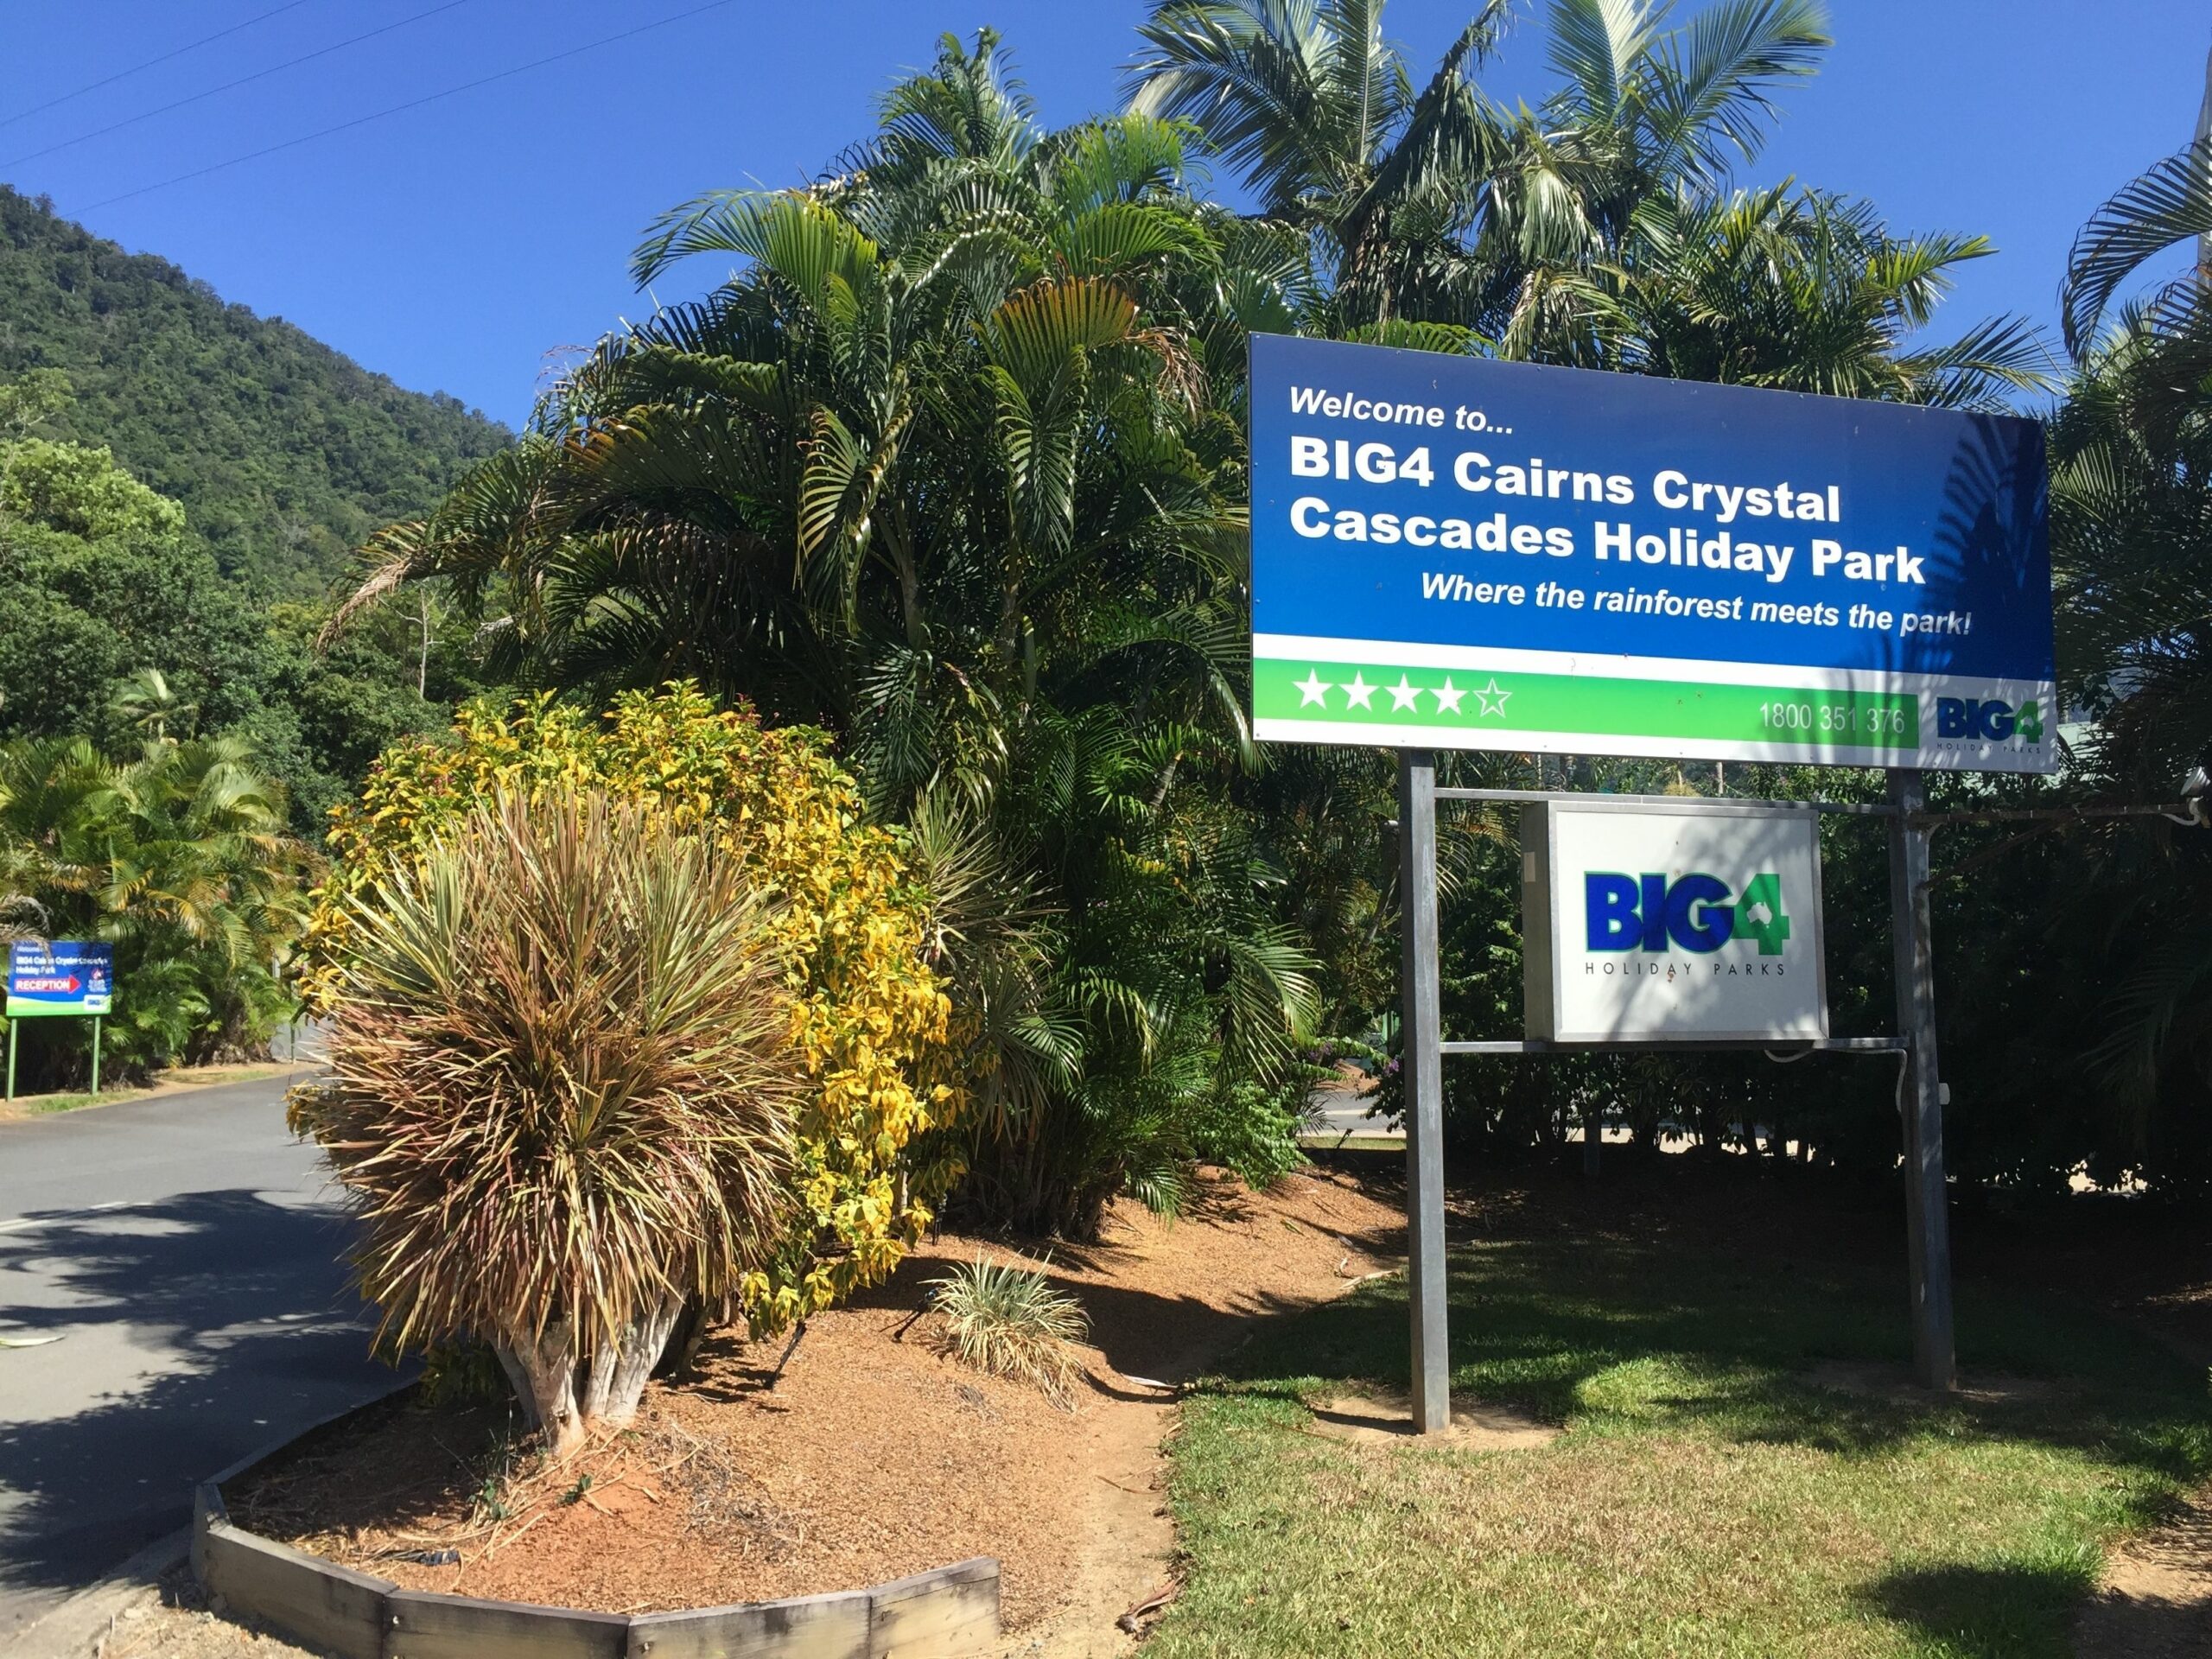 Big4 Cairns Crystal Cascades Holiday Park